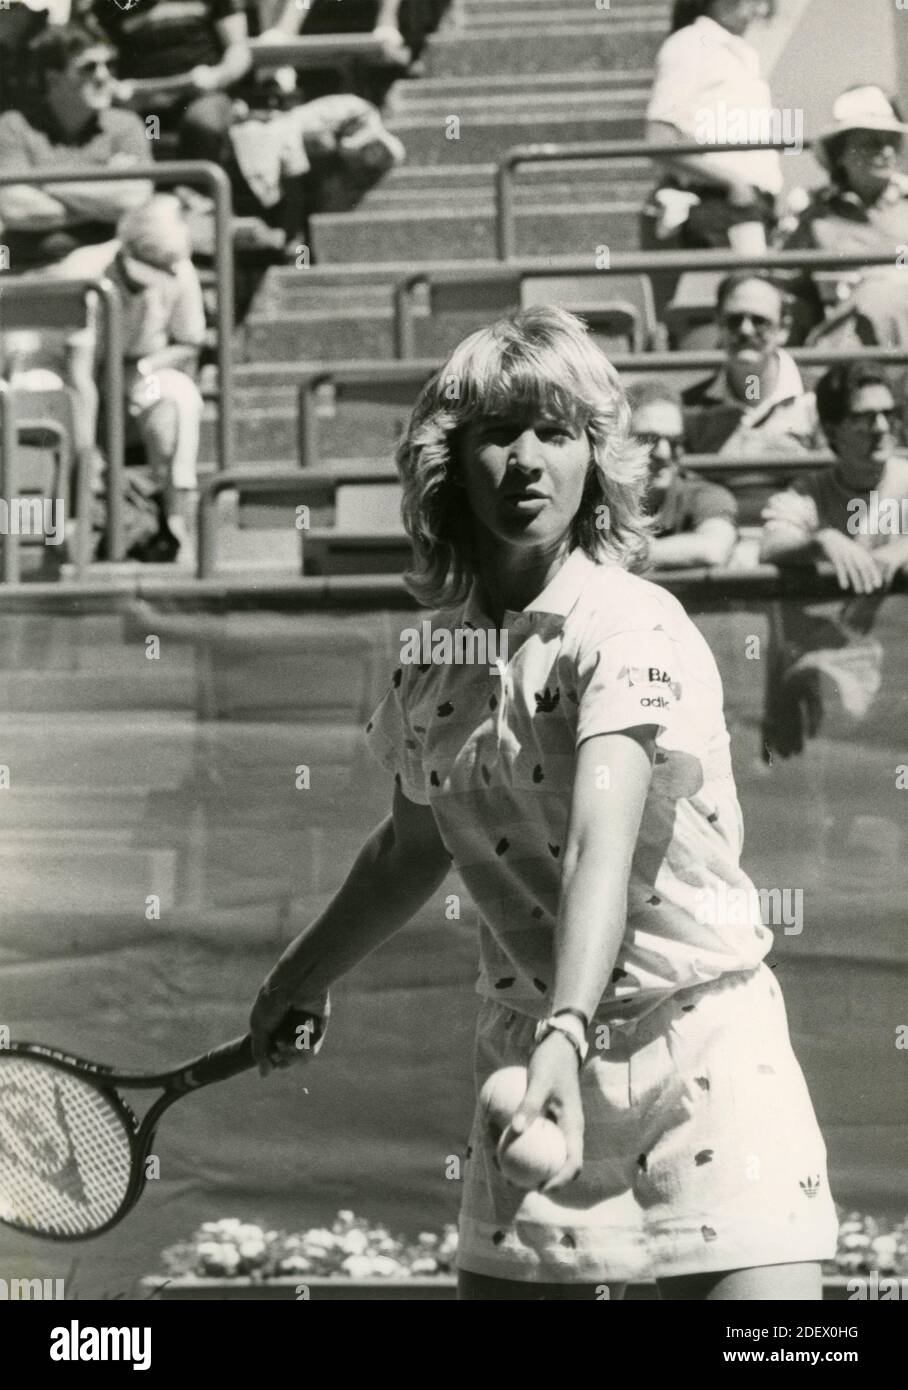 German tennis player Steffi Graf, US Open 1986 Stock Photo - Alamy